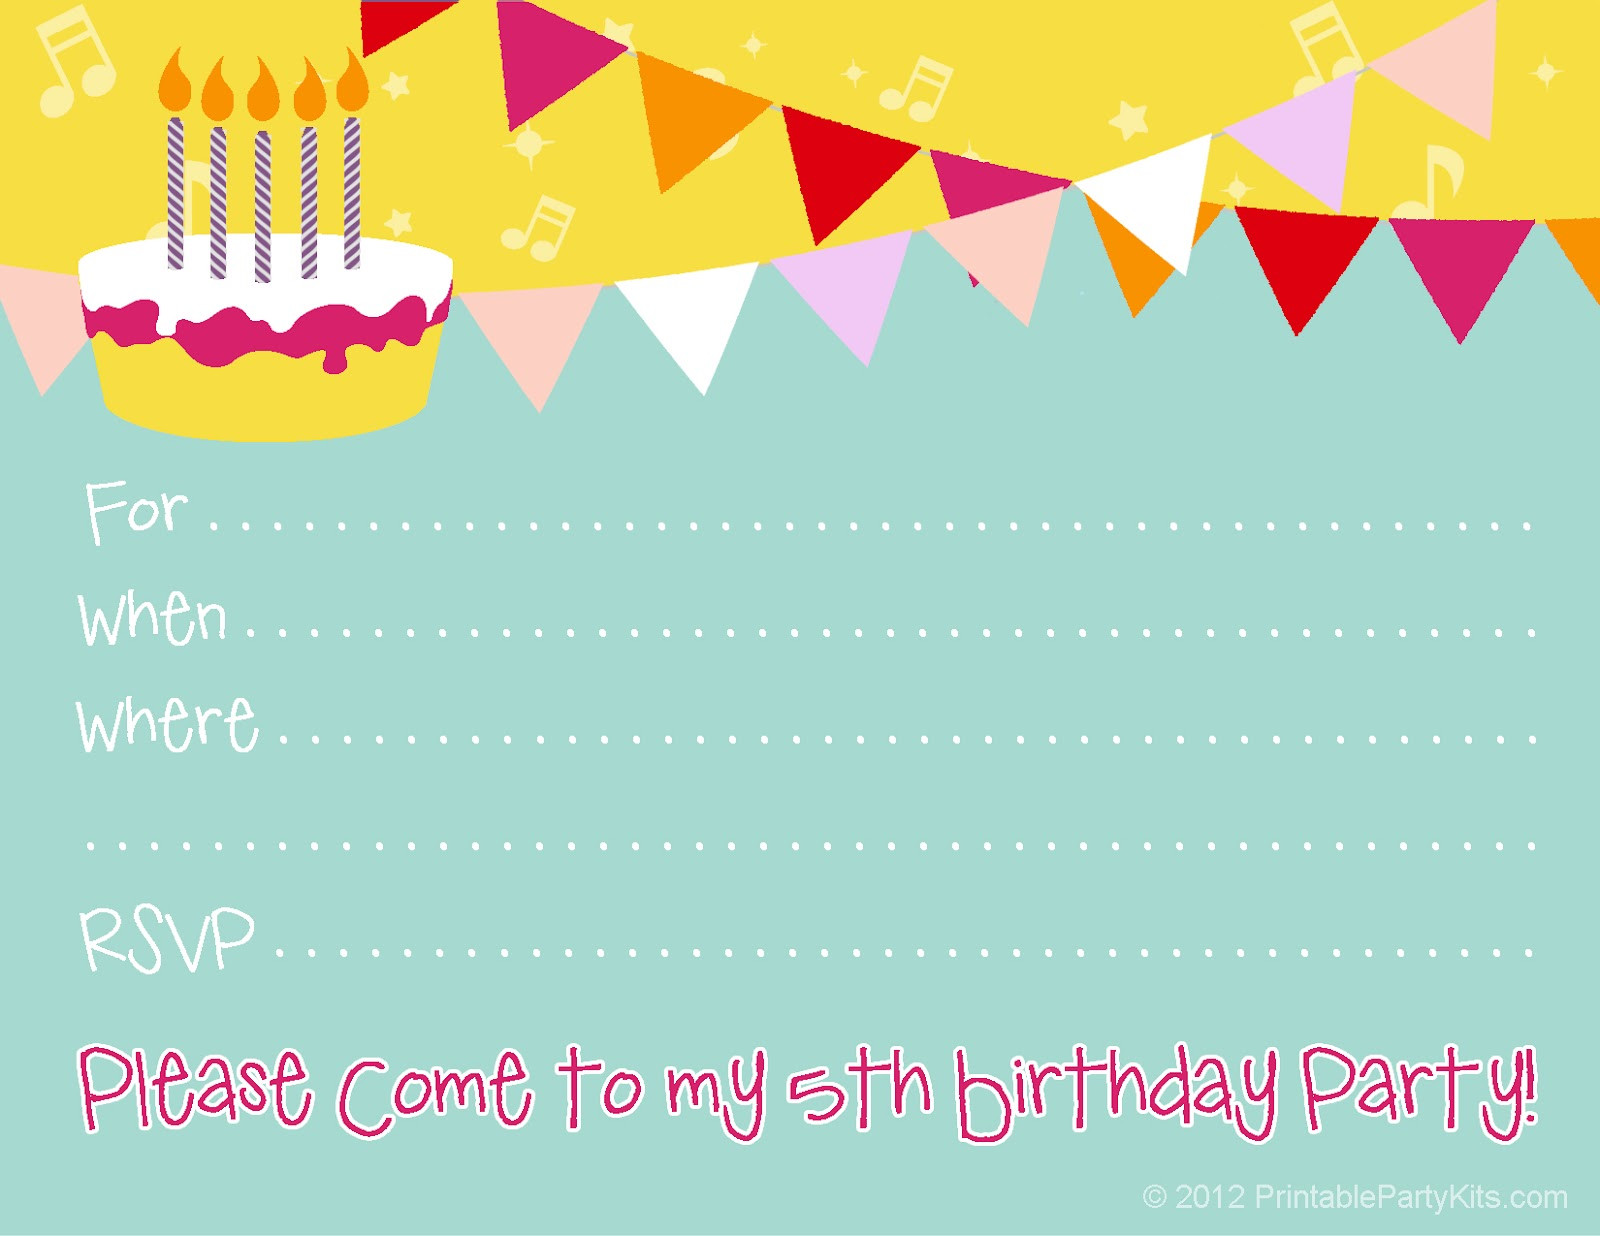 Free Online Birthday Party Invitations
 Free Birthday Party Invitations for Girl – FREE Printable